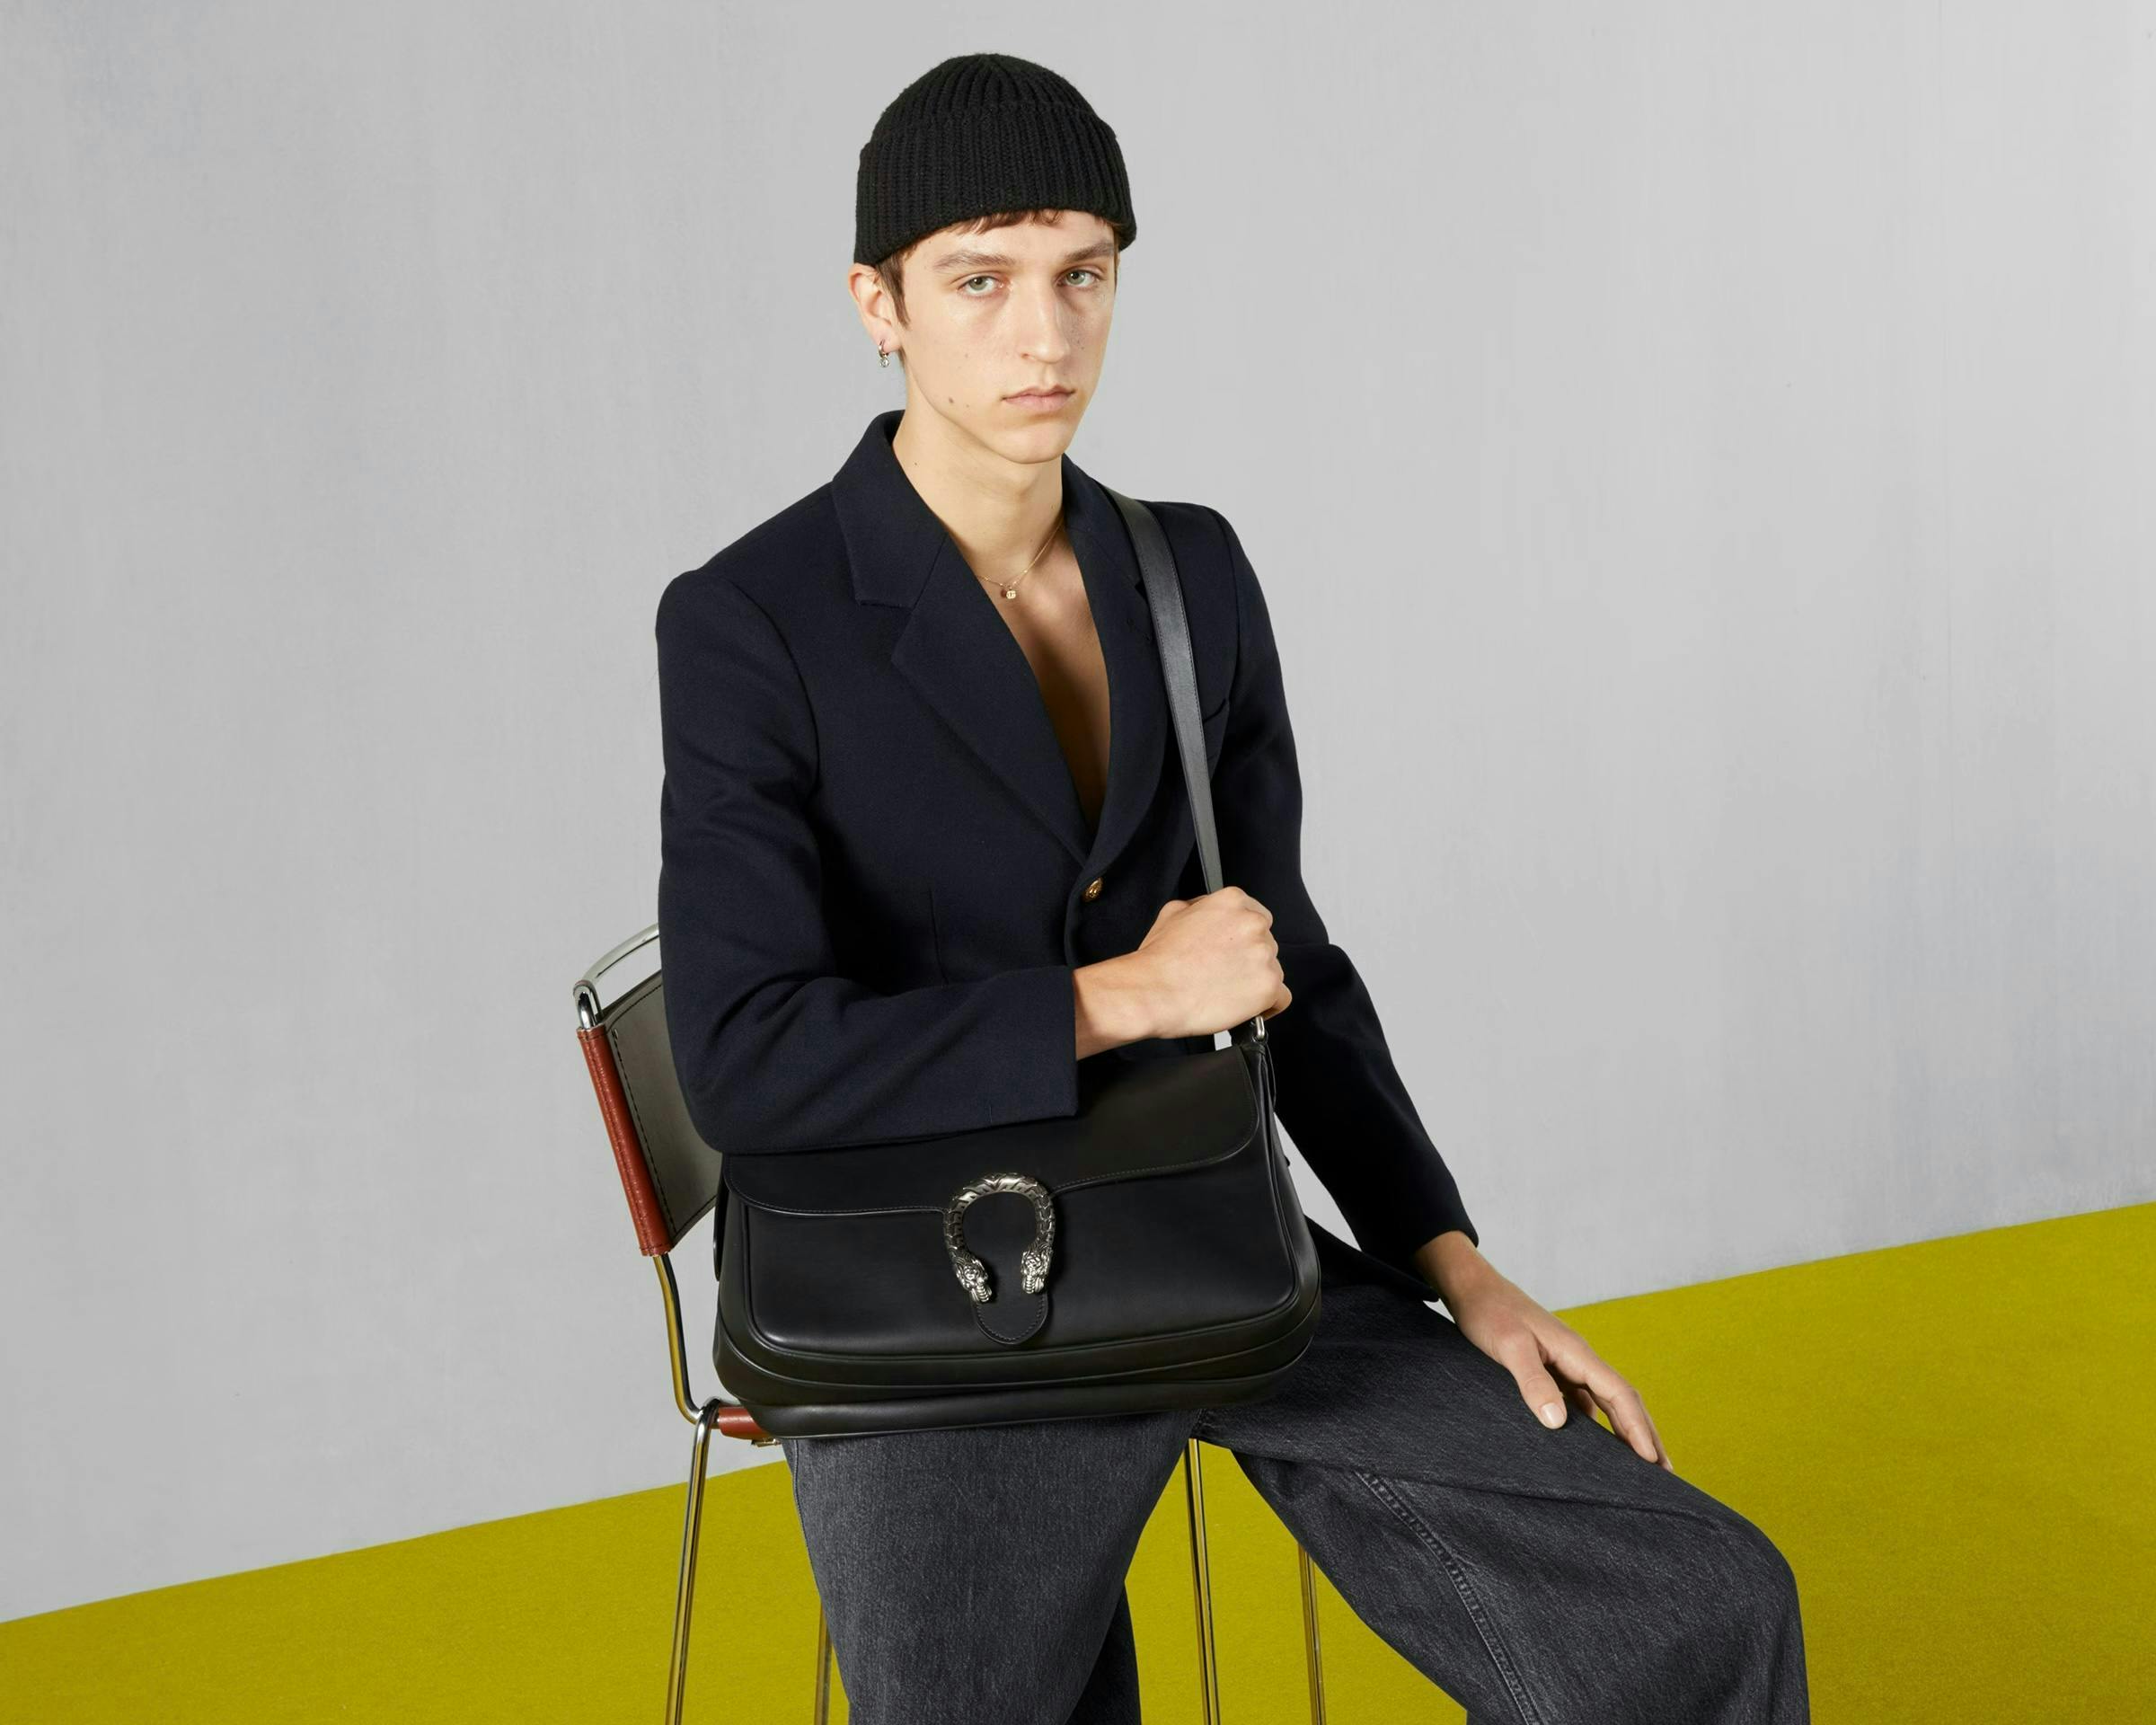 accessories bag handbag blazer coat jacket purse formal wear suit sitting